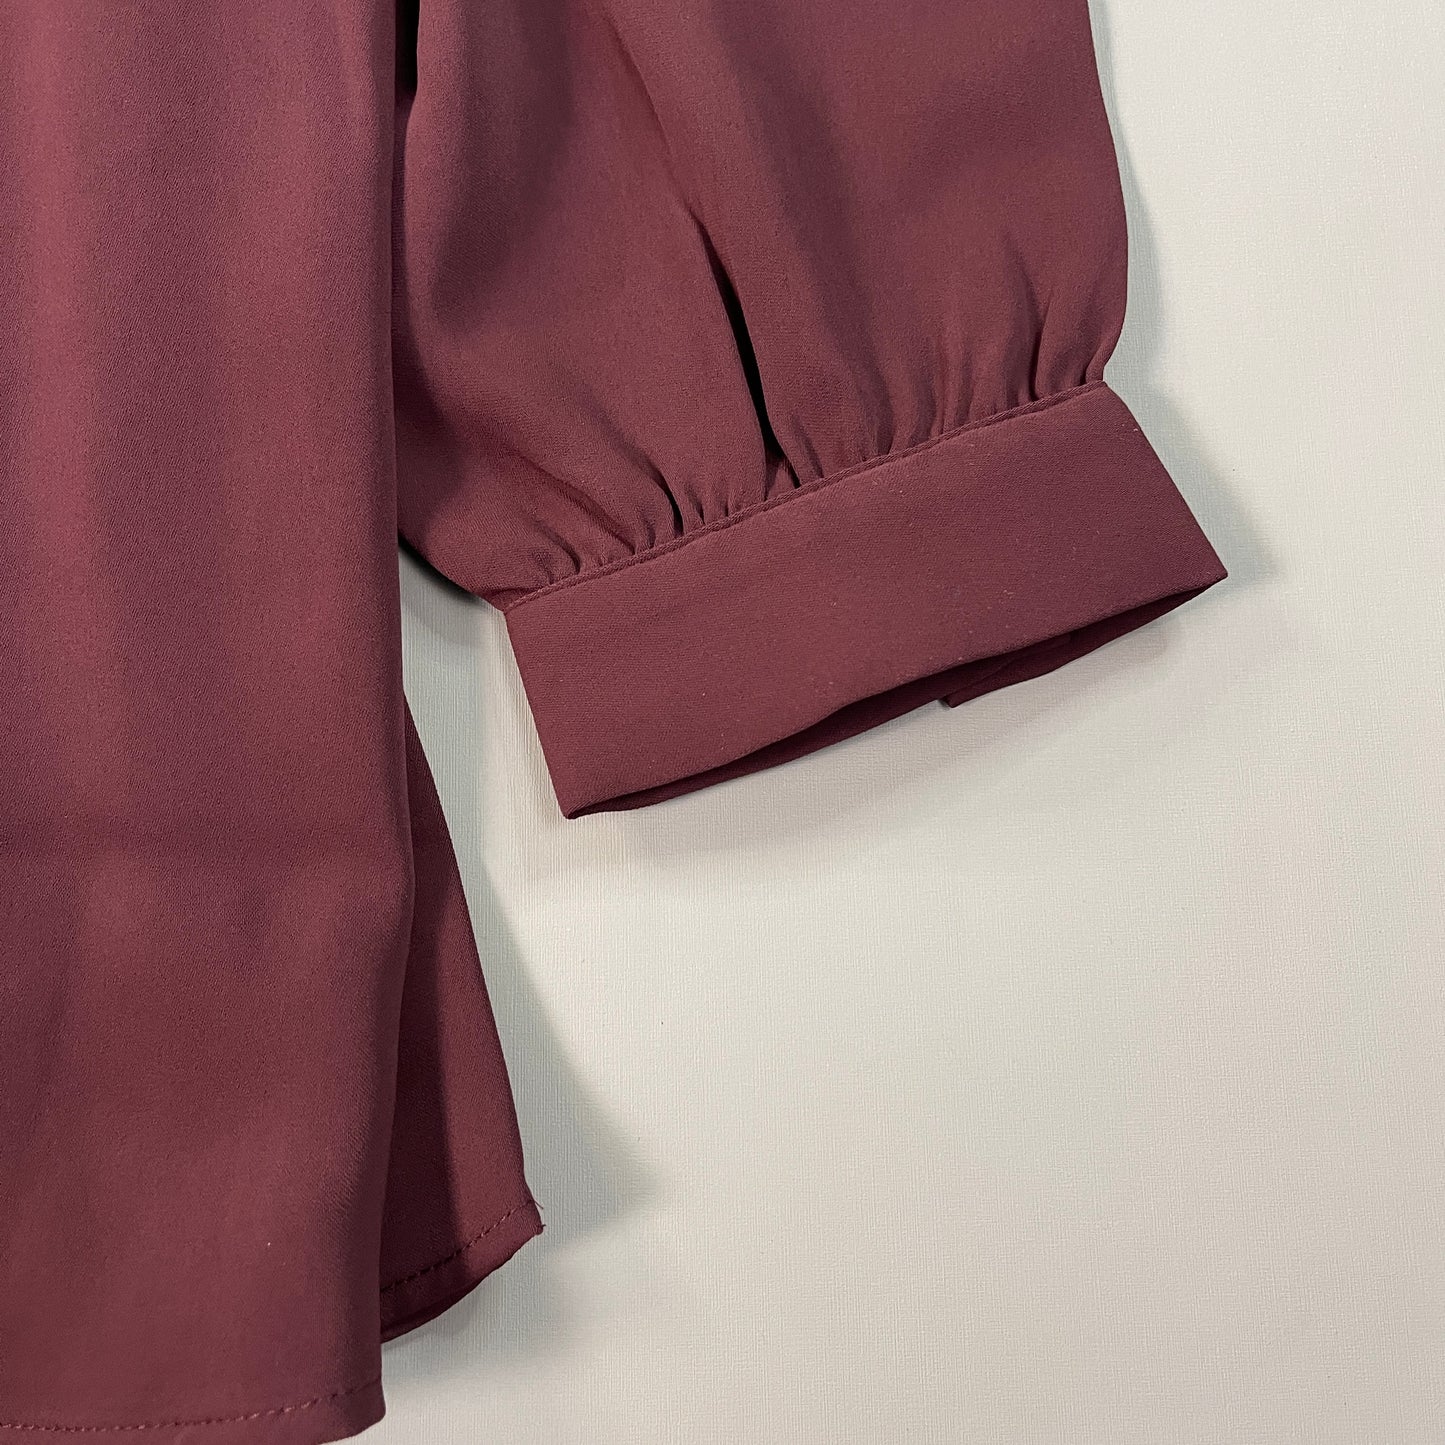 MARTHA STEWART Woven Front Button Blouse Top Tie Neck Women's Sz 1X Chianti (New)